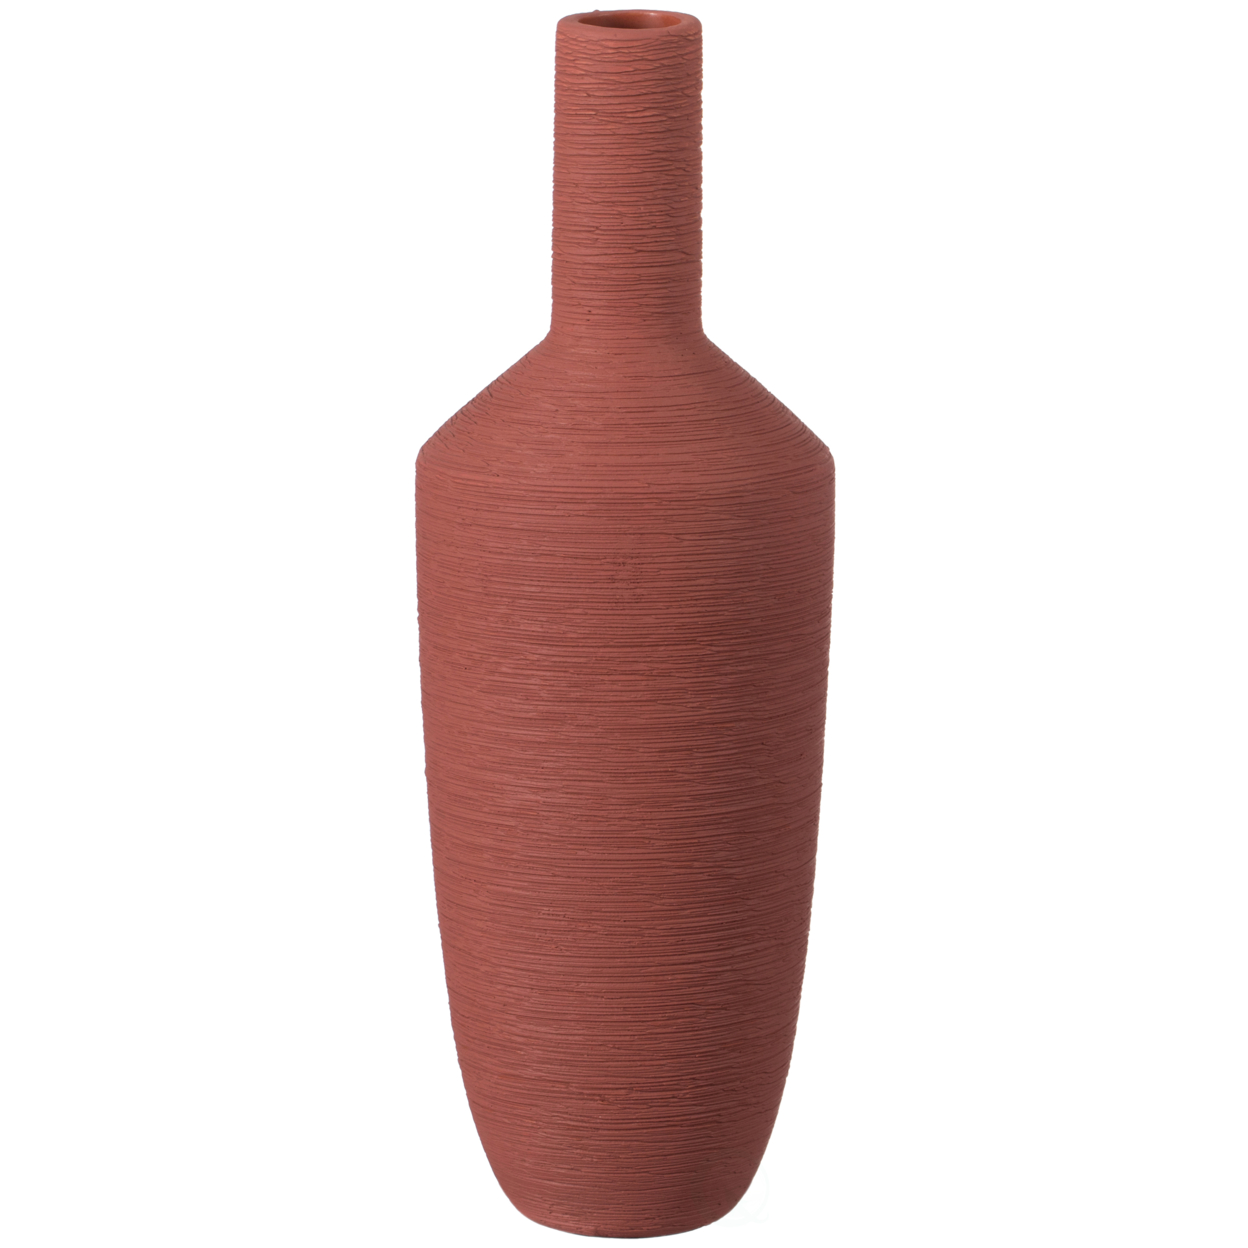 Decorative Ceramic Vase, Modern Style Centerpiece Table Vase - Red